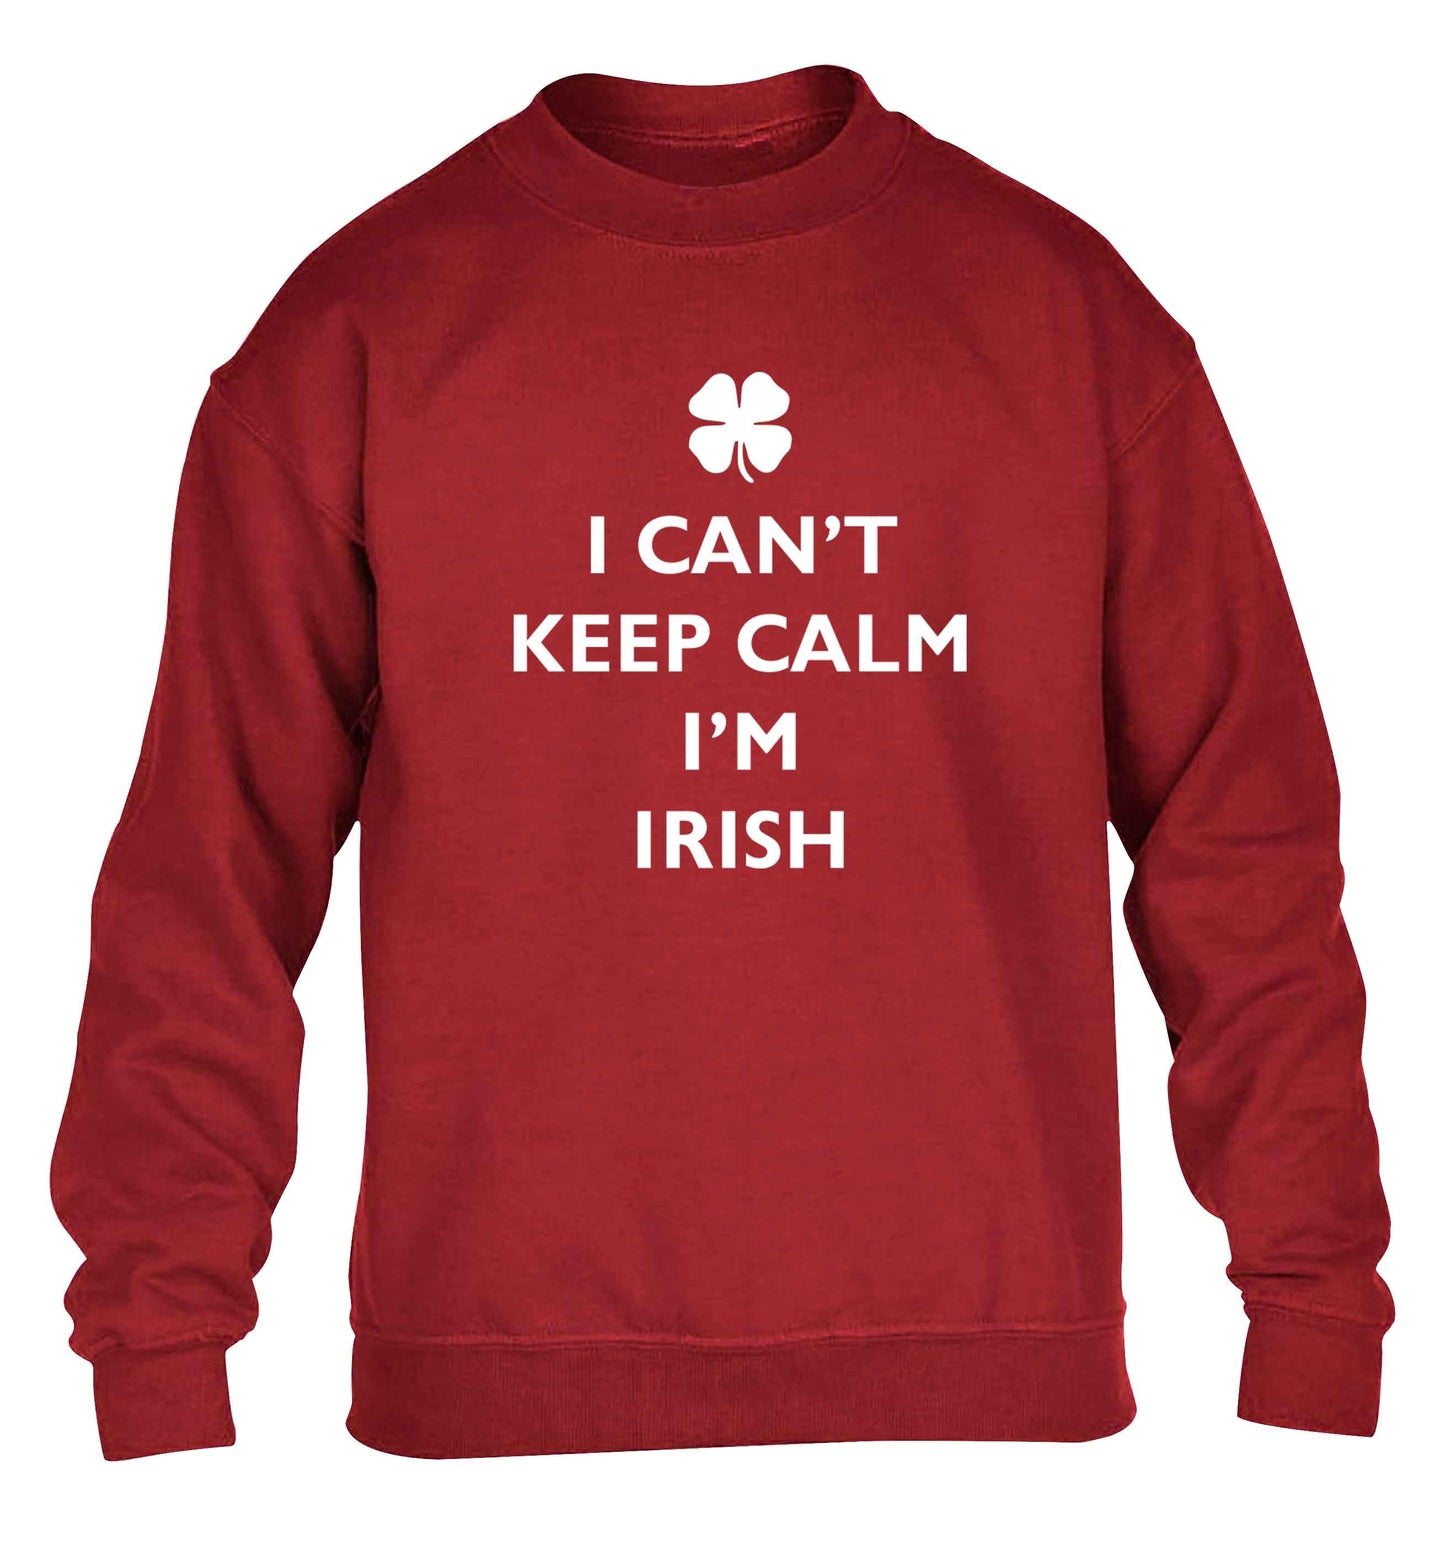 I can't keep calm I'm Irish children's grey sweater 12-13 Years